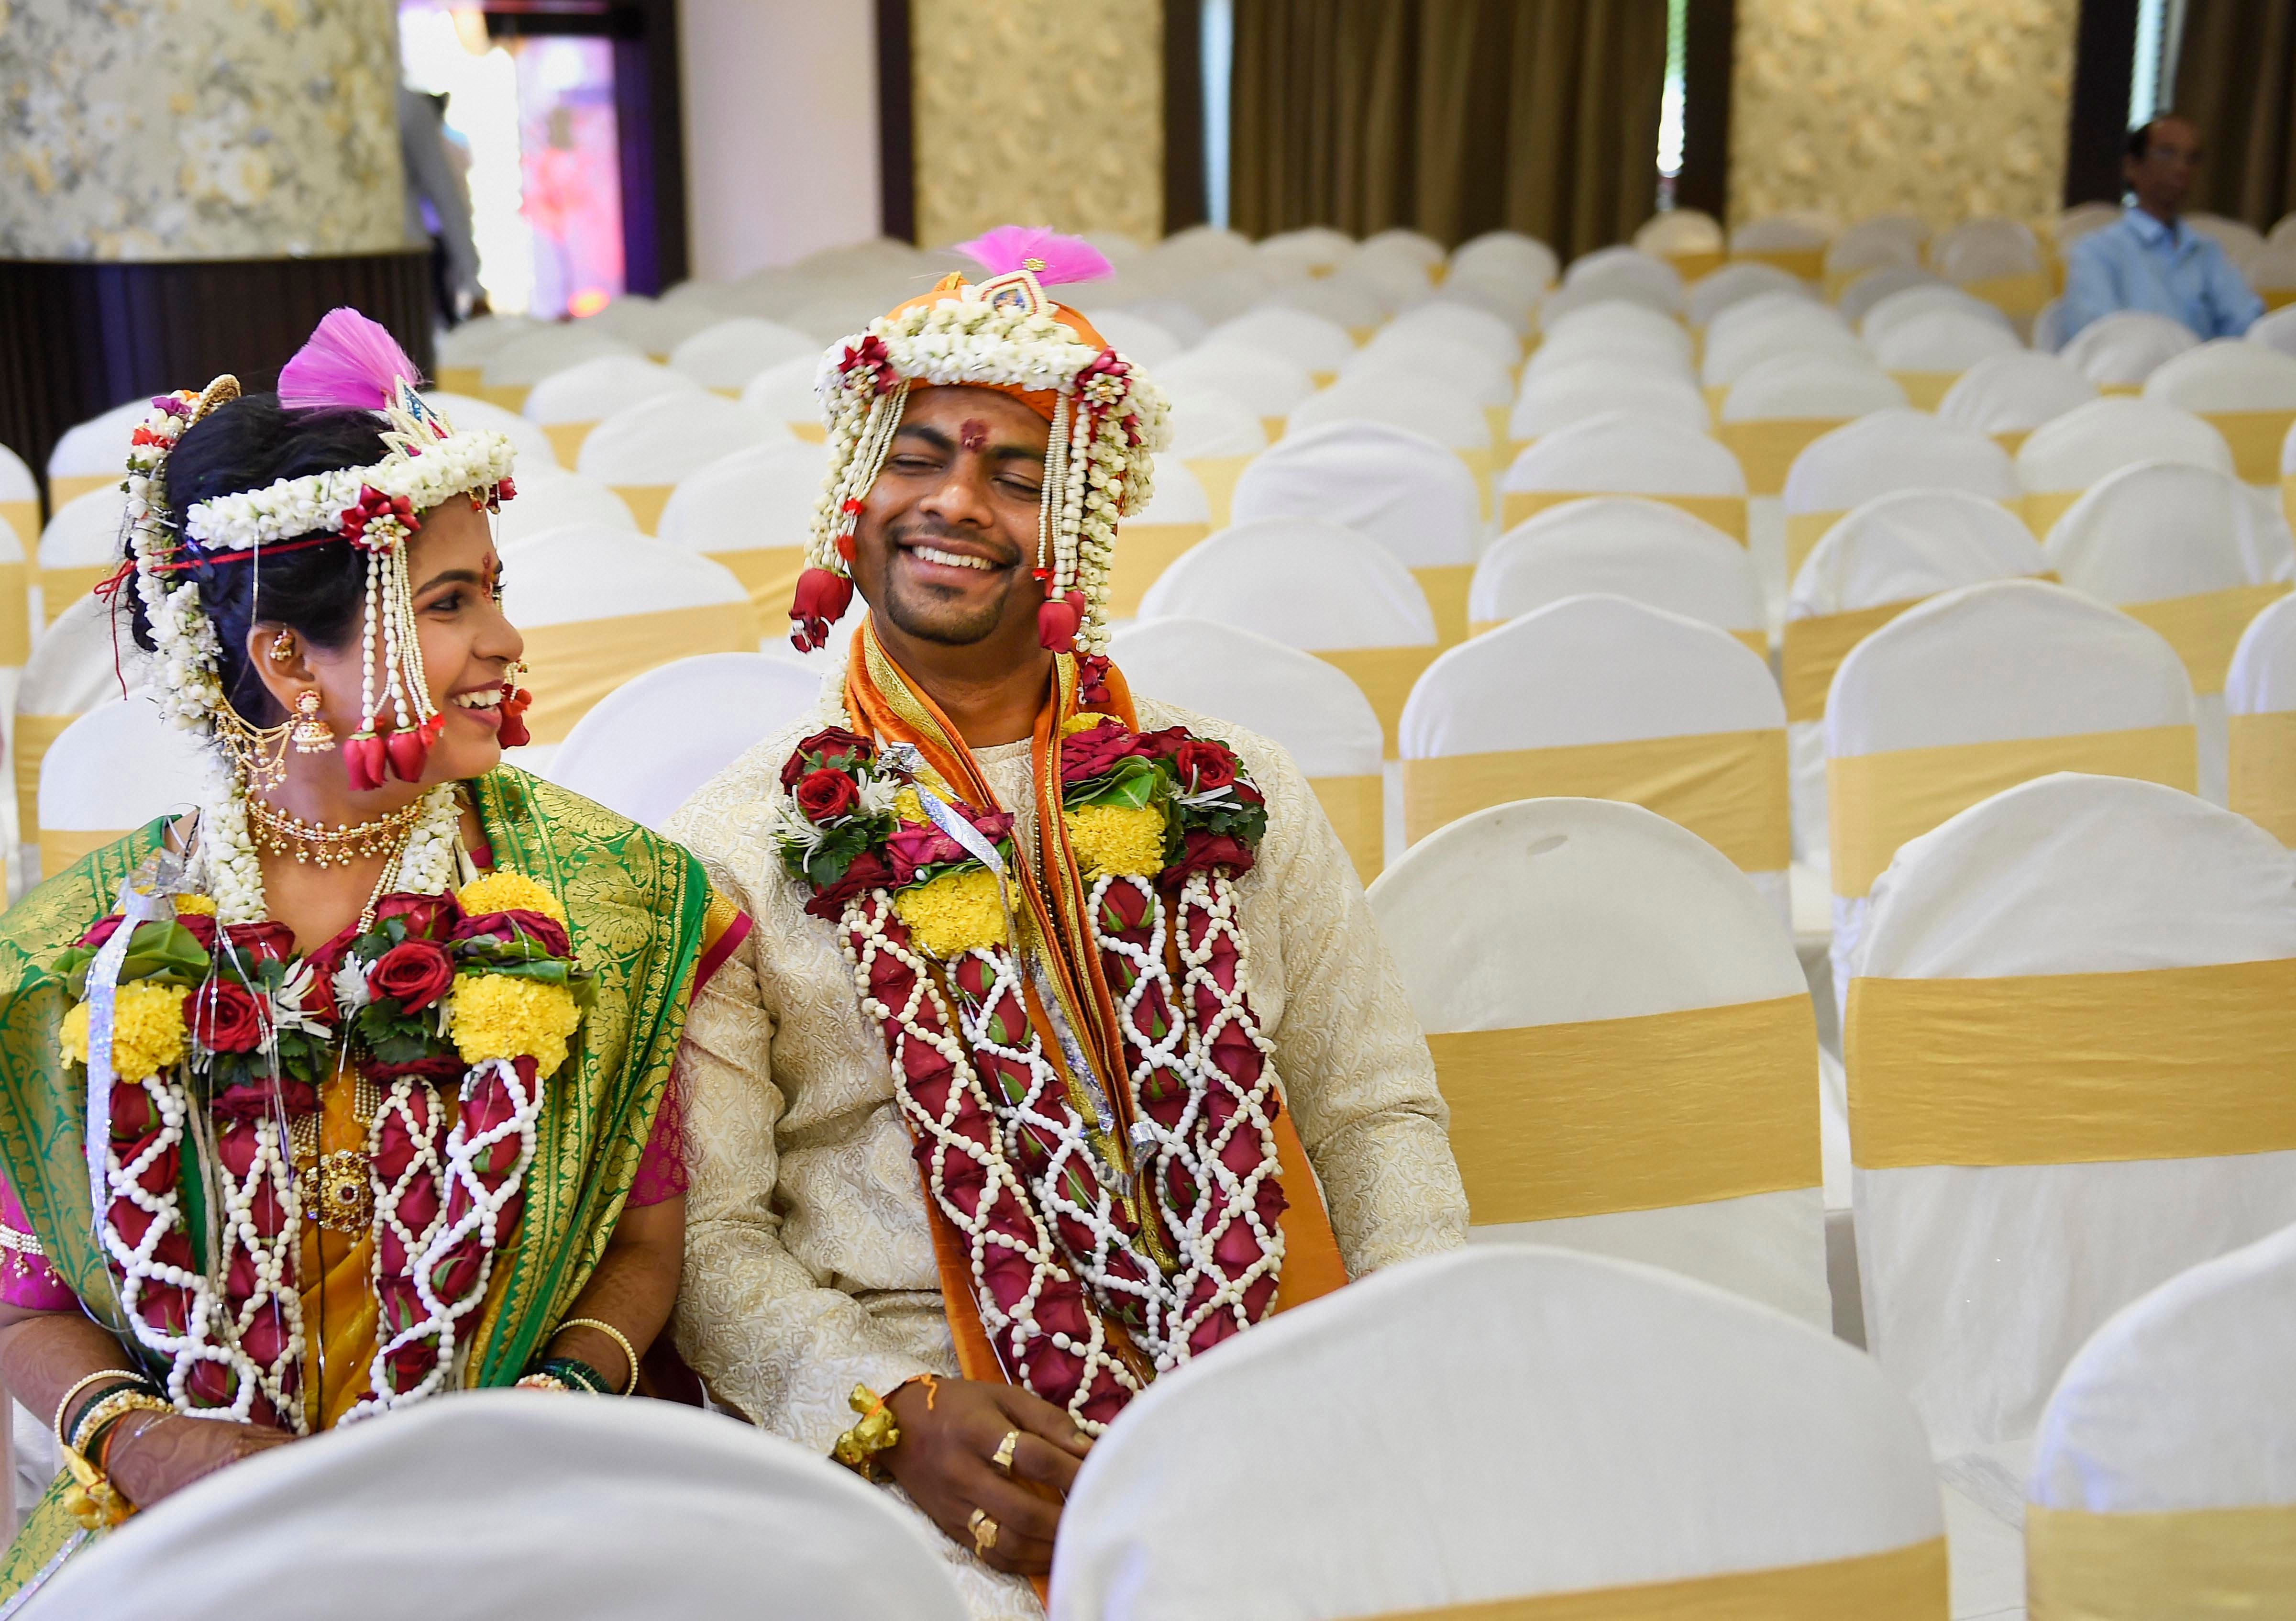 Ruchit Sane (groom) and Akshita Vaidya (bride) share a light moment during their wedding ceremony in Mumbai. (Credit: PTI Photo)